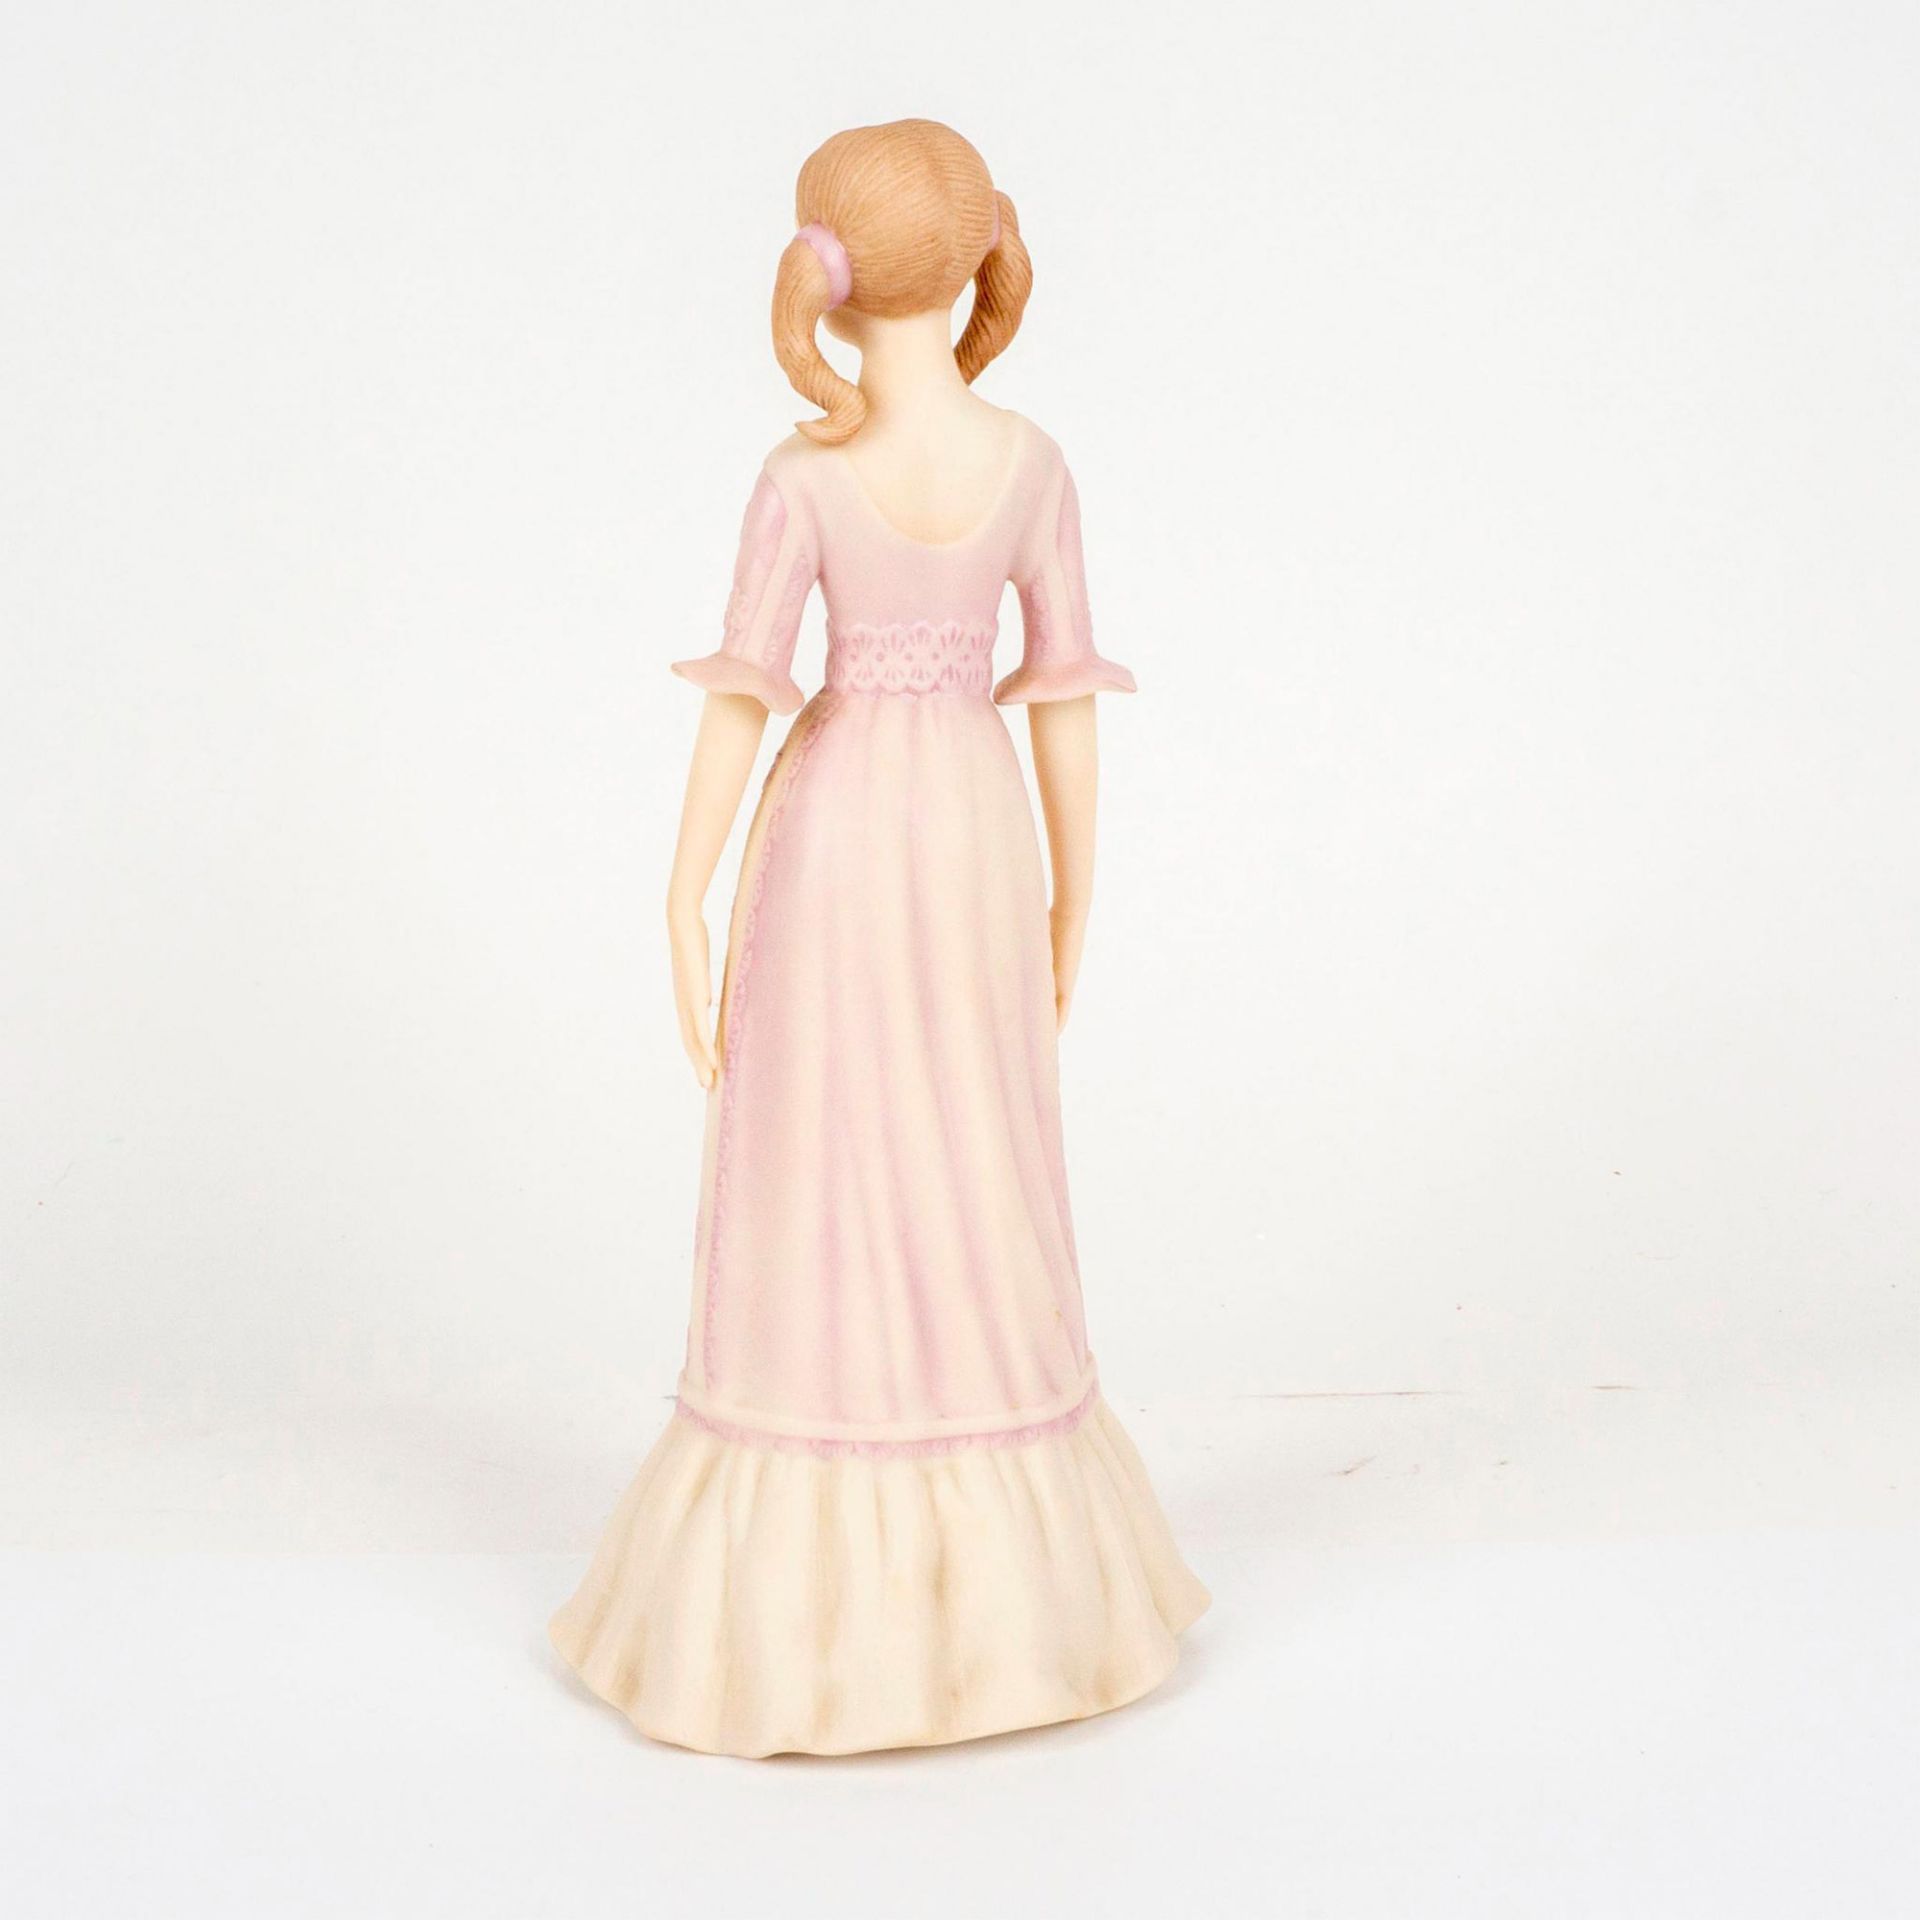 Goebel Porcelain Figurine, Gracious Princess - Image 2 of 3